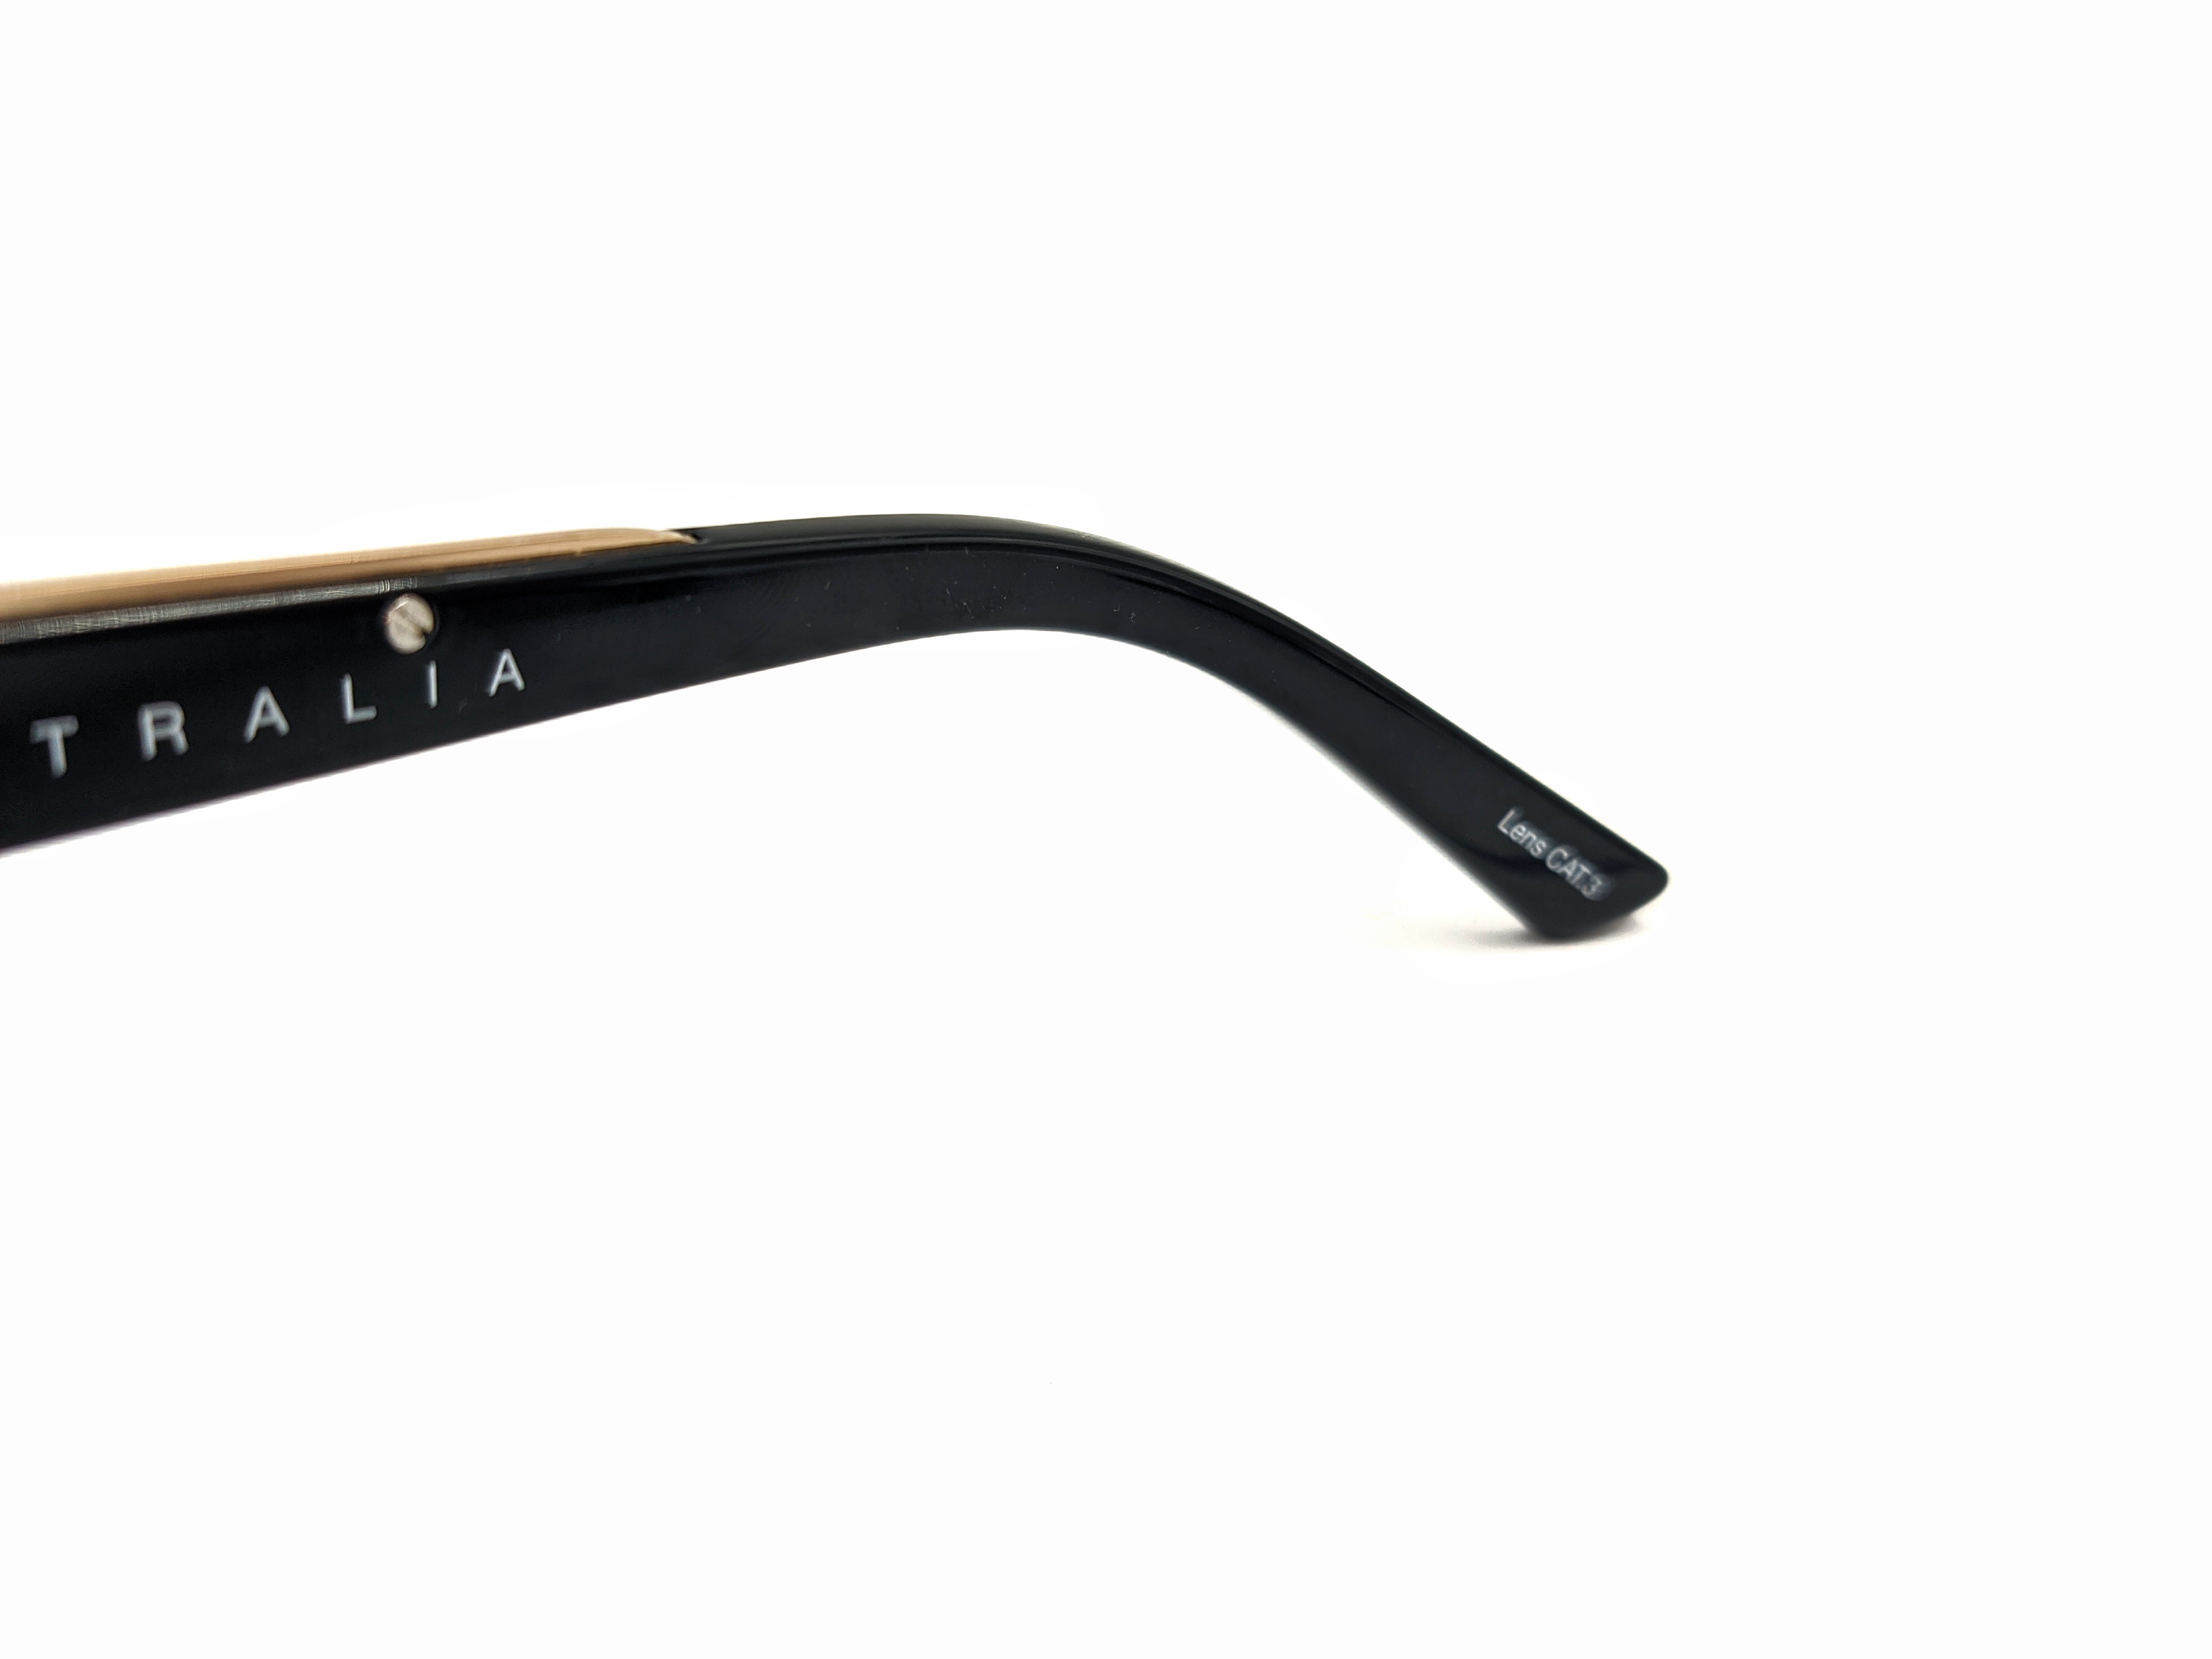 Personalised Sunglasses Company Sunglasses Acetate Sunglasses Women UV400 PC Polarized Unisex